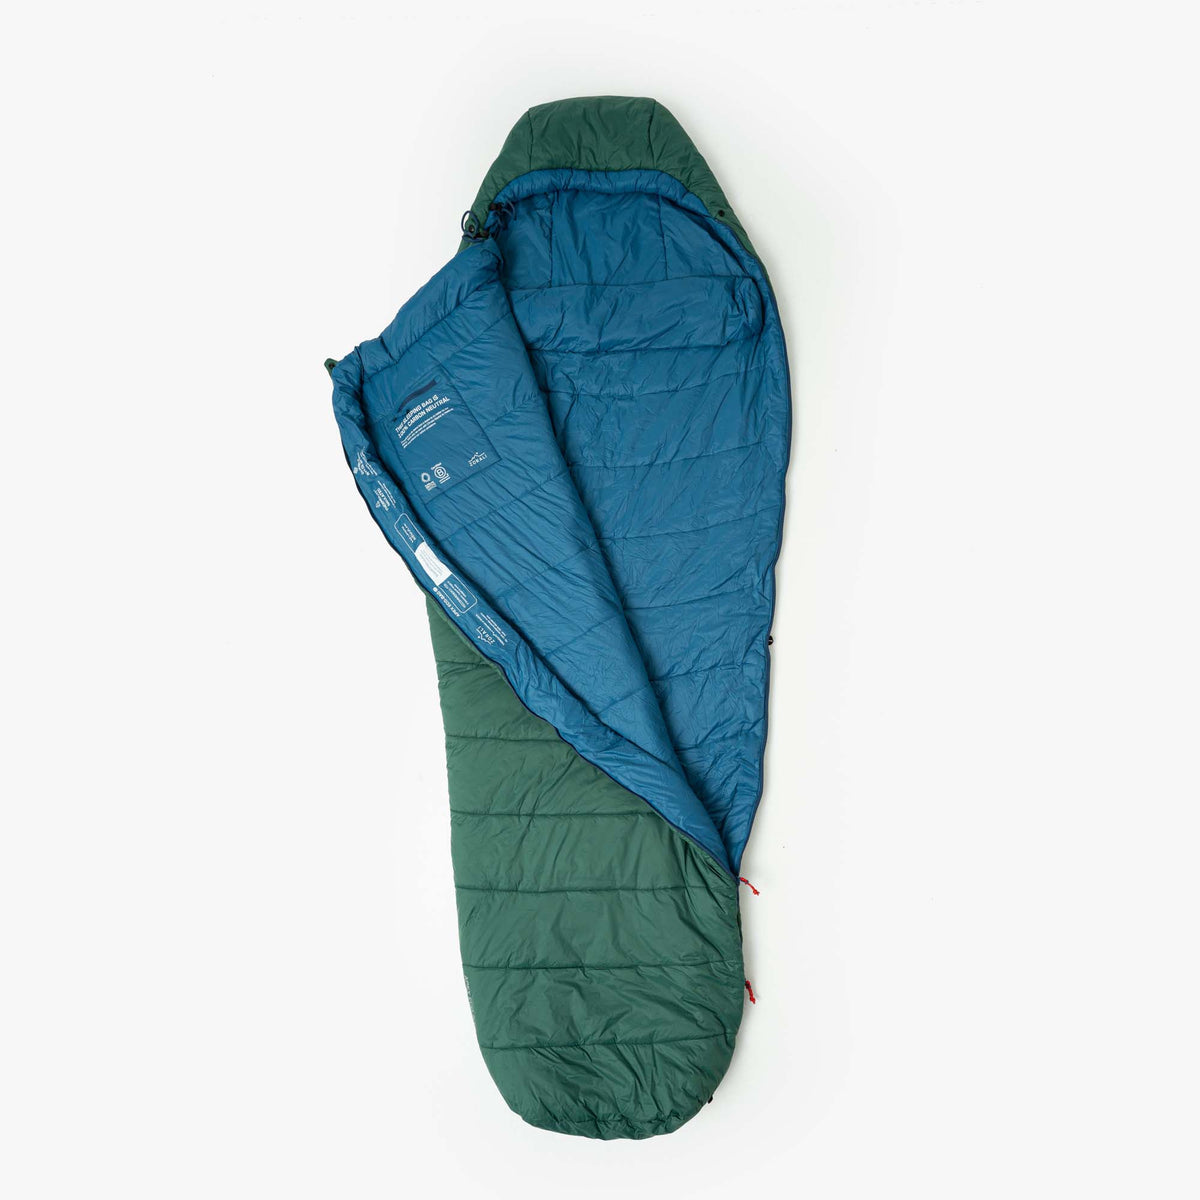 Apex Eco Sleeping Bag 4°C Daintree